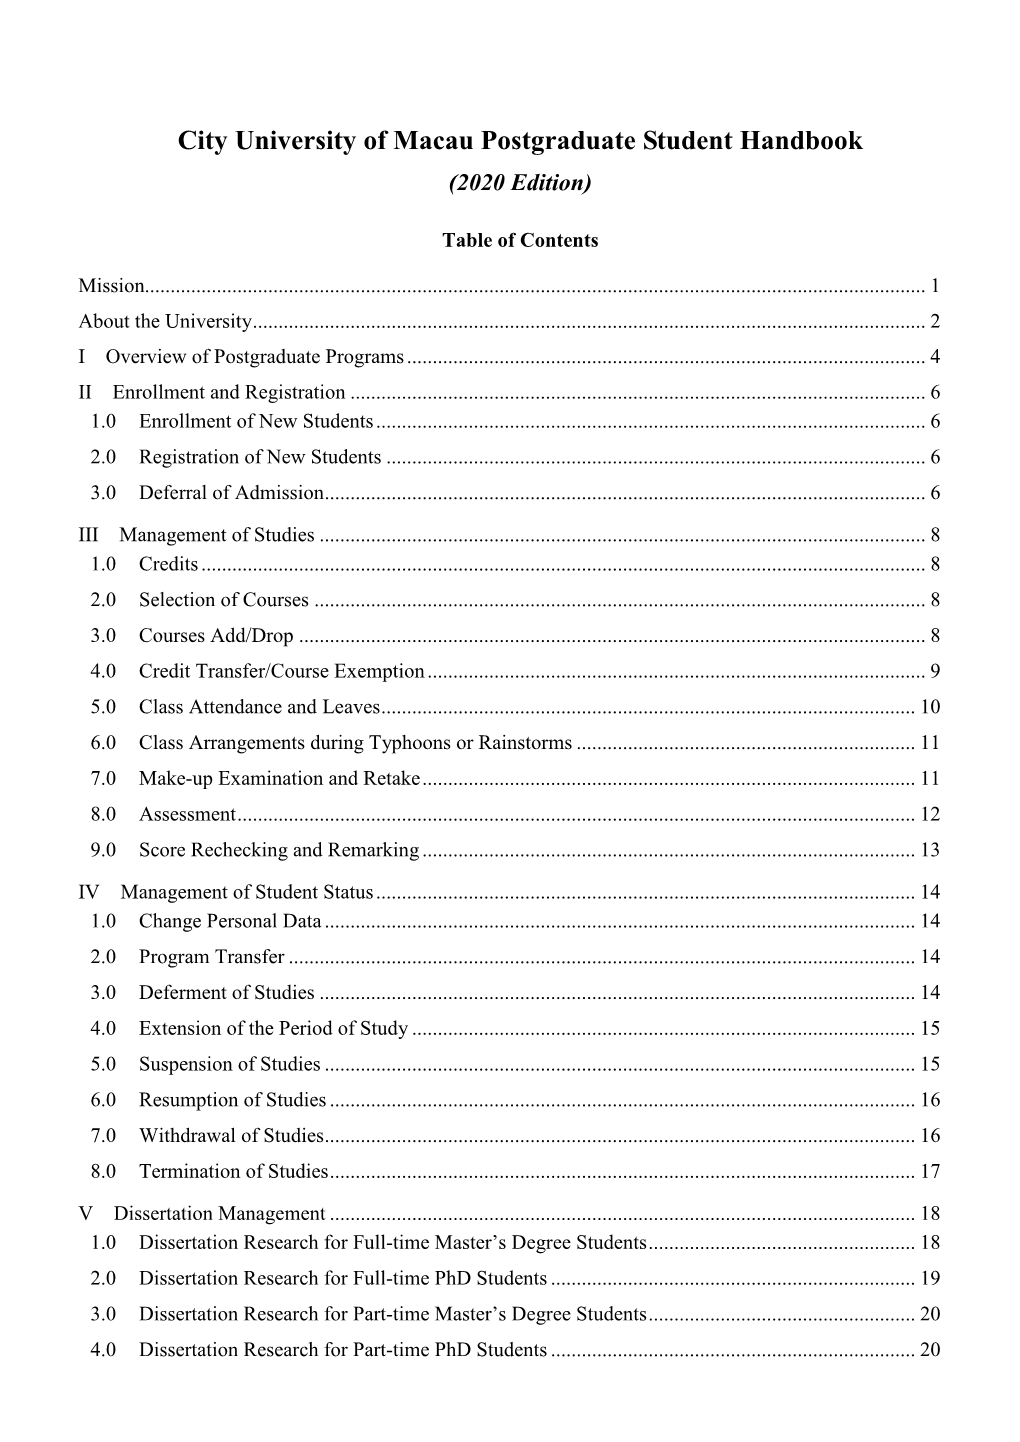 City University of Macau Postgraduate Student Handbook (2020 Edition)